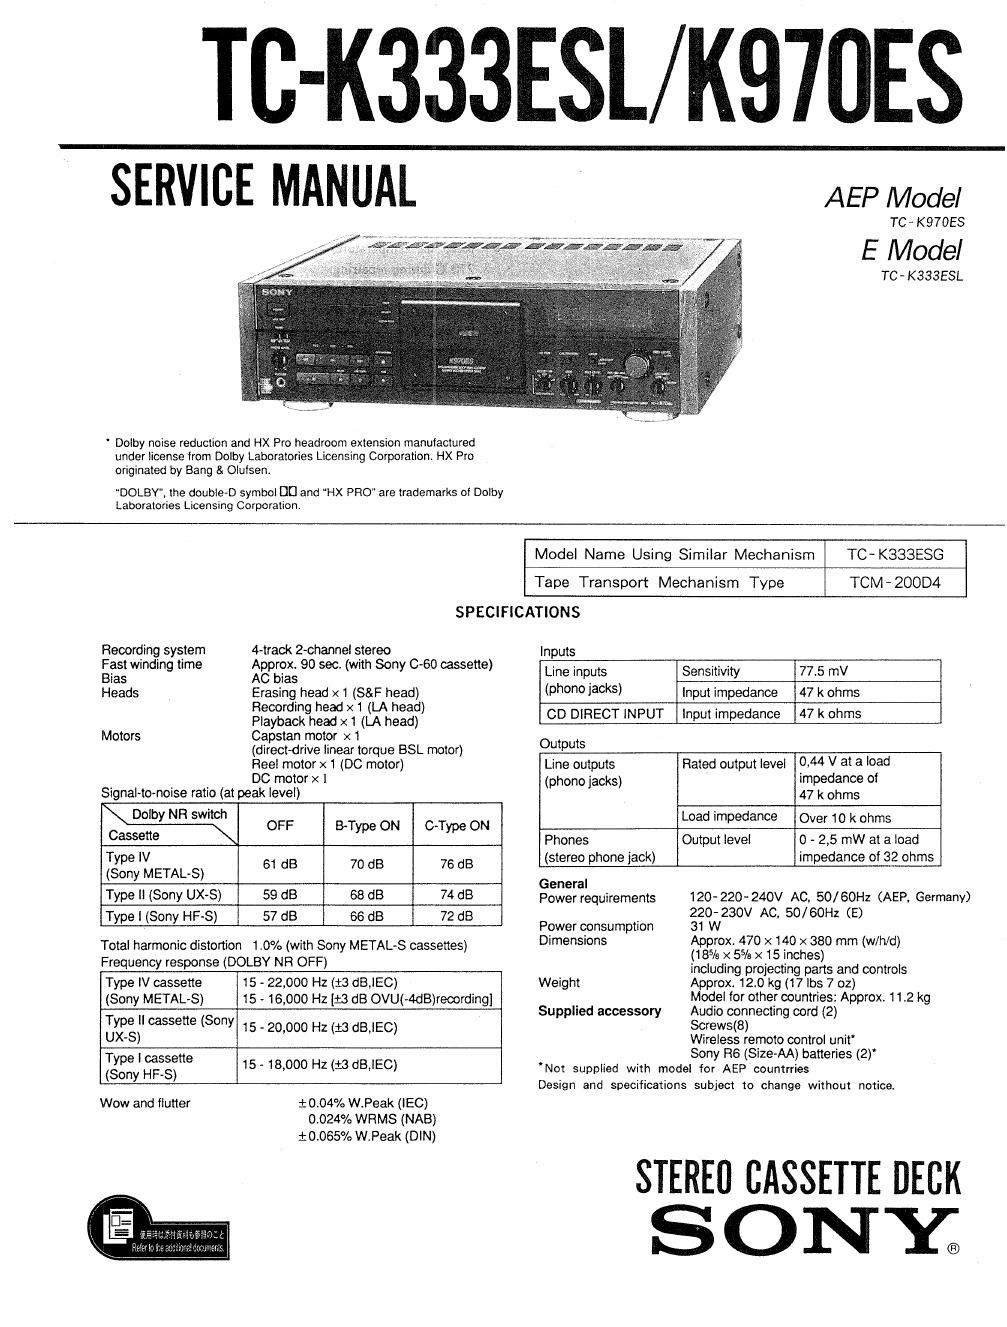 sony tc k 690 es service manual